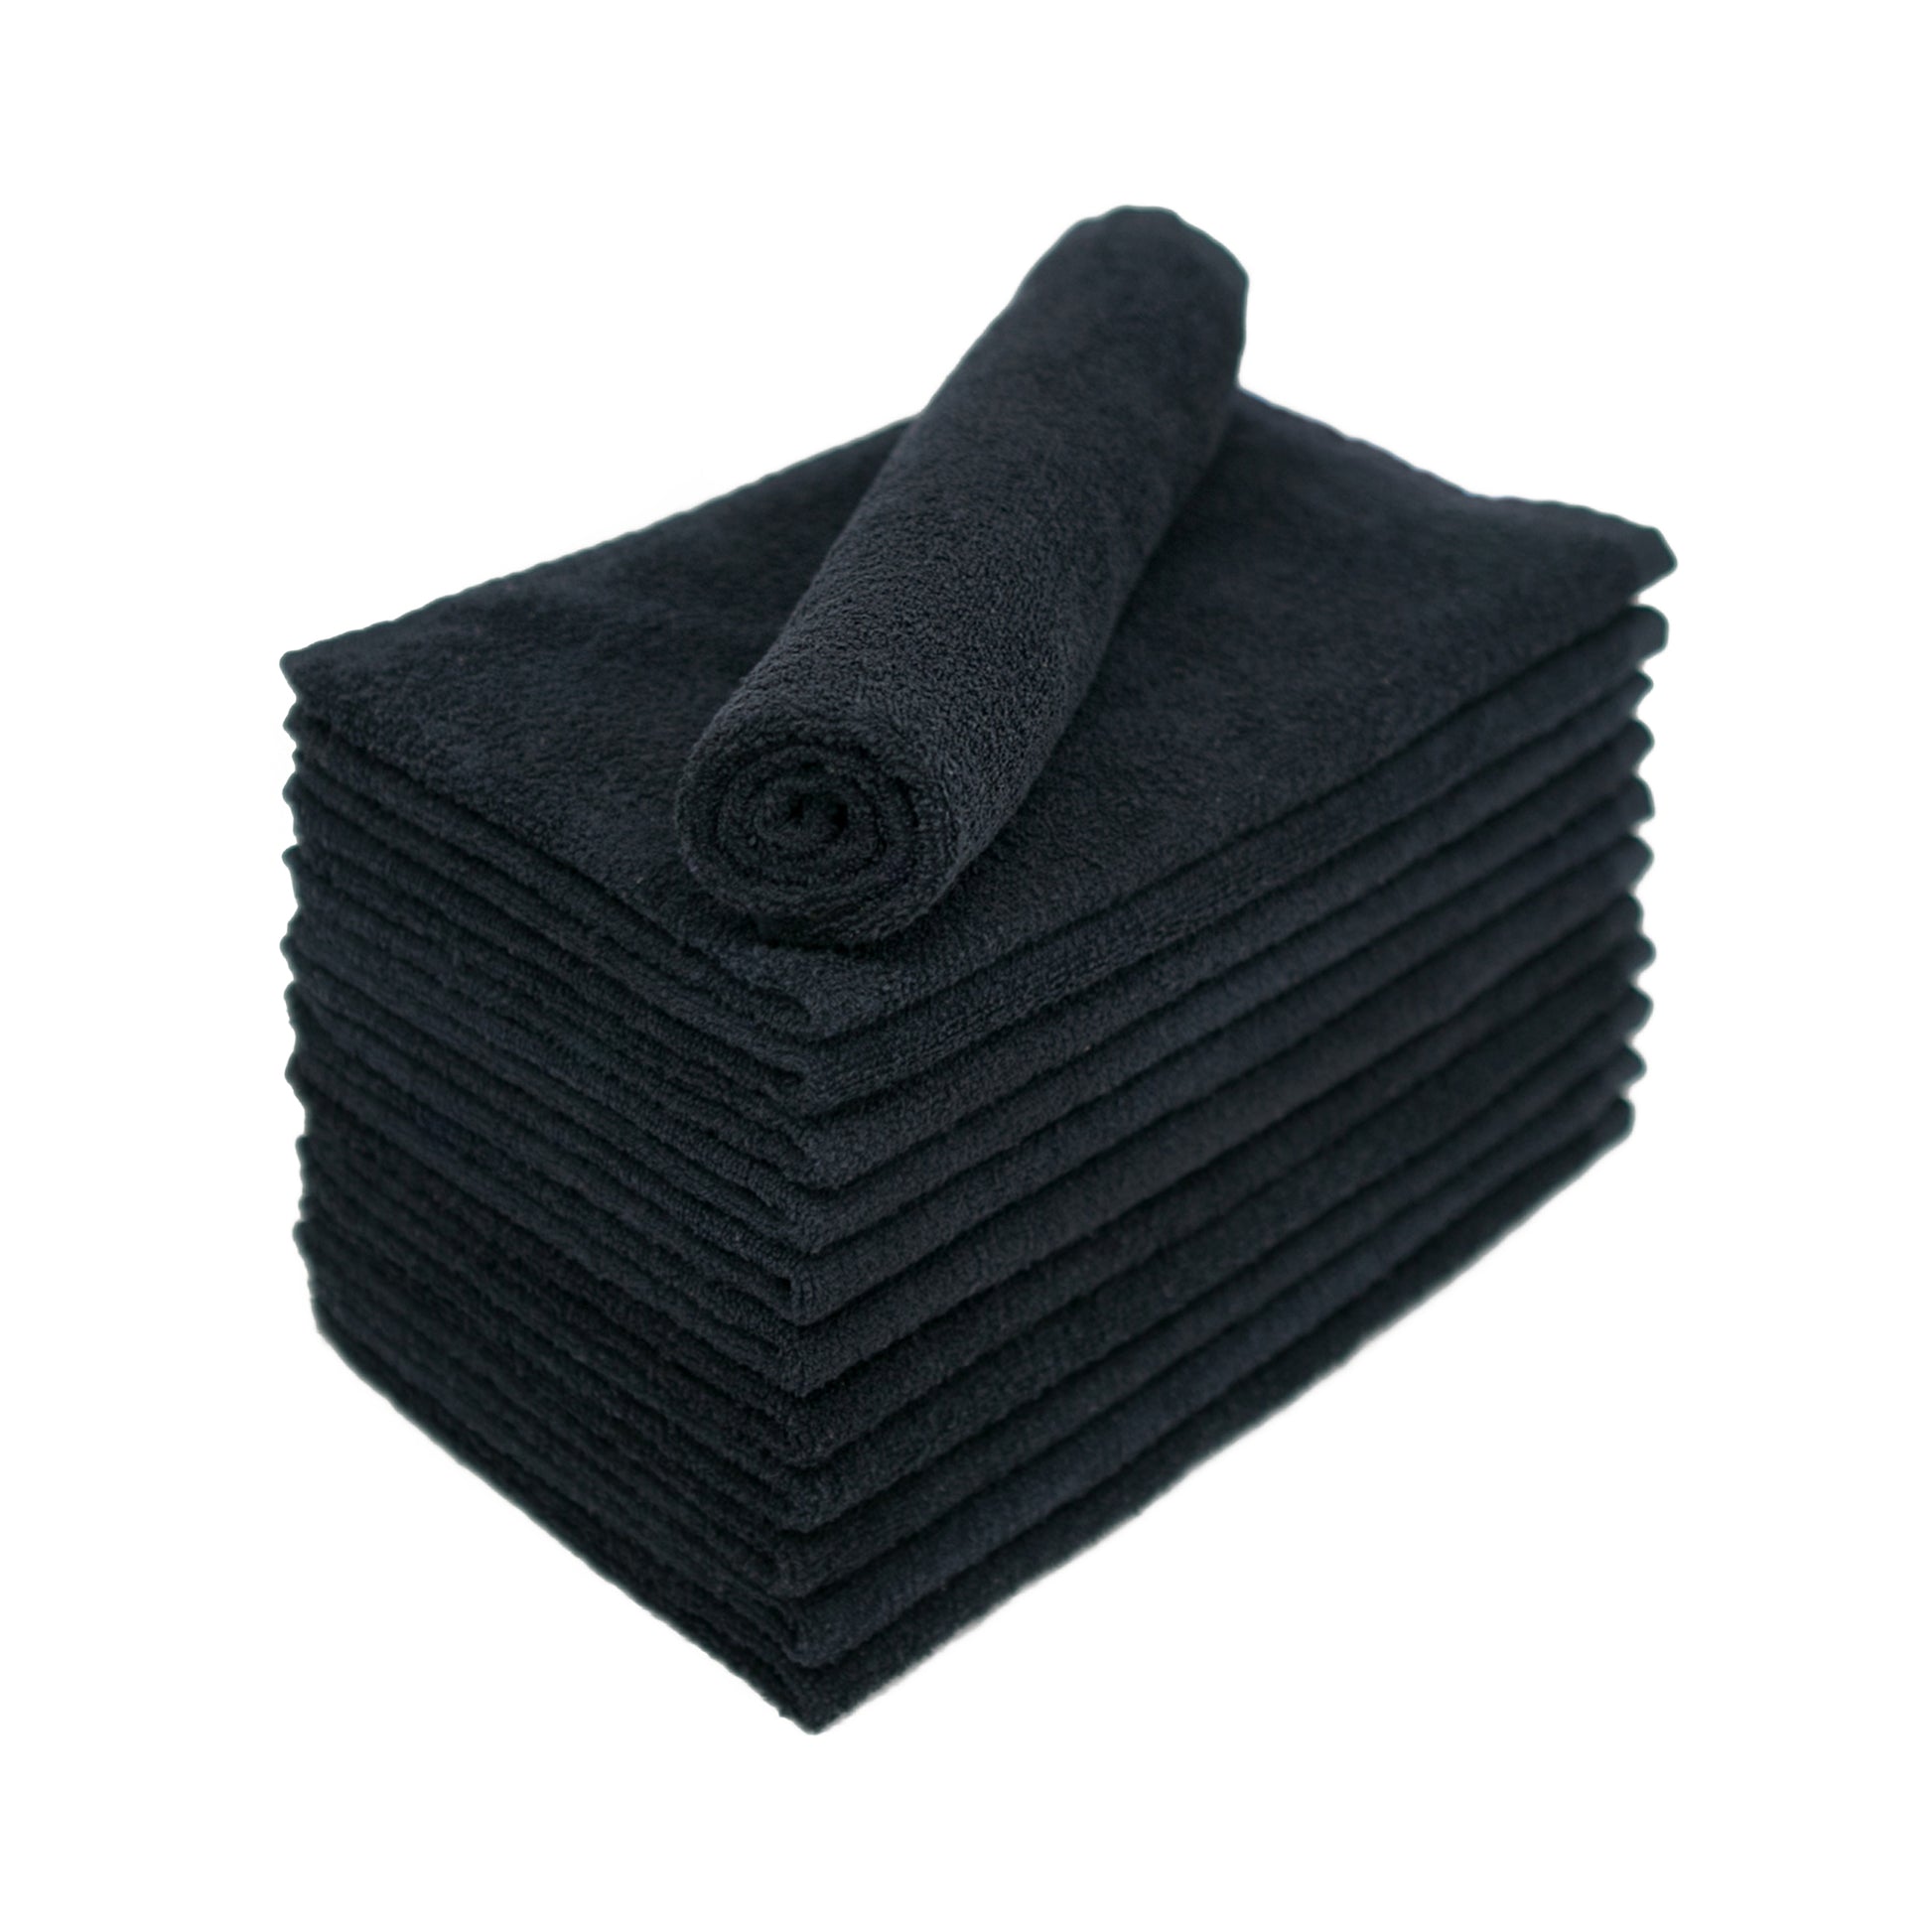 Premium Quality Face- Towel- Cloth 12 x 12 (12 Towels) Black